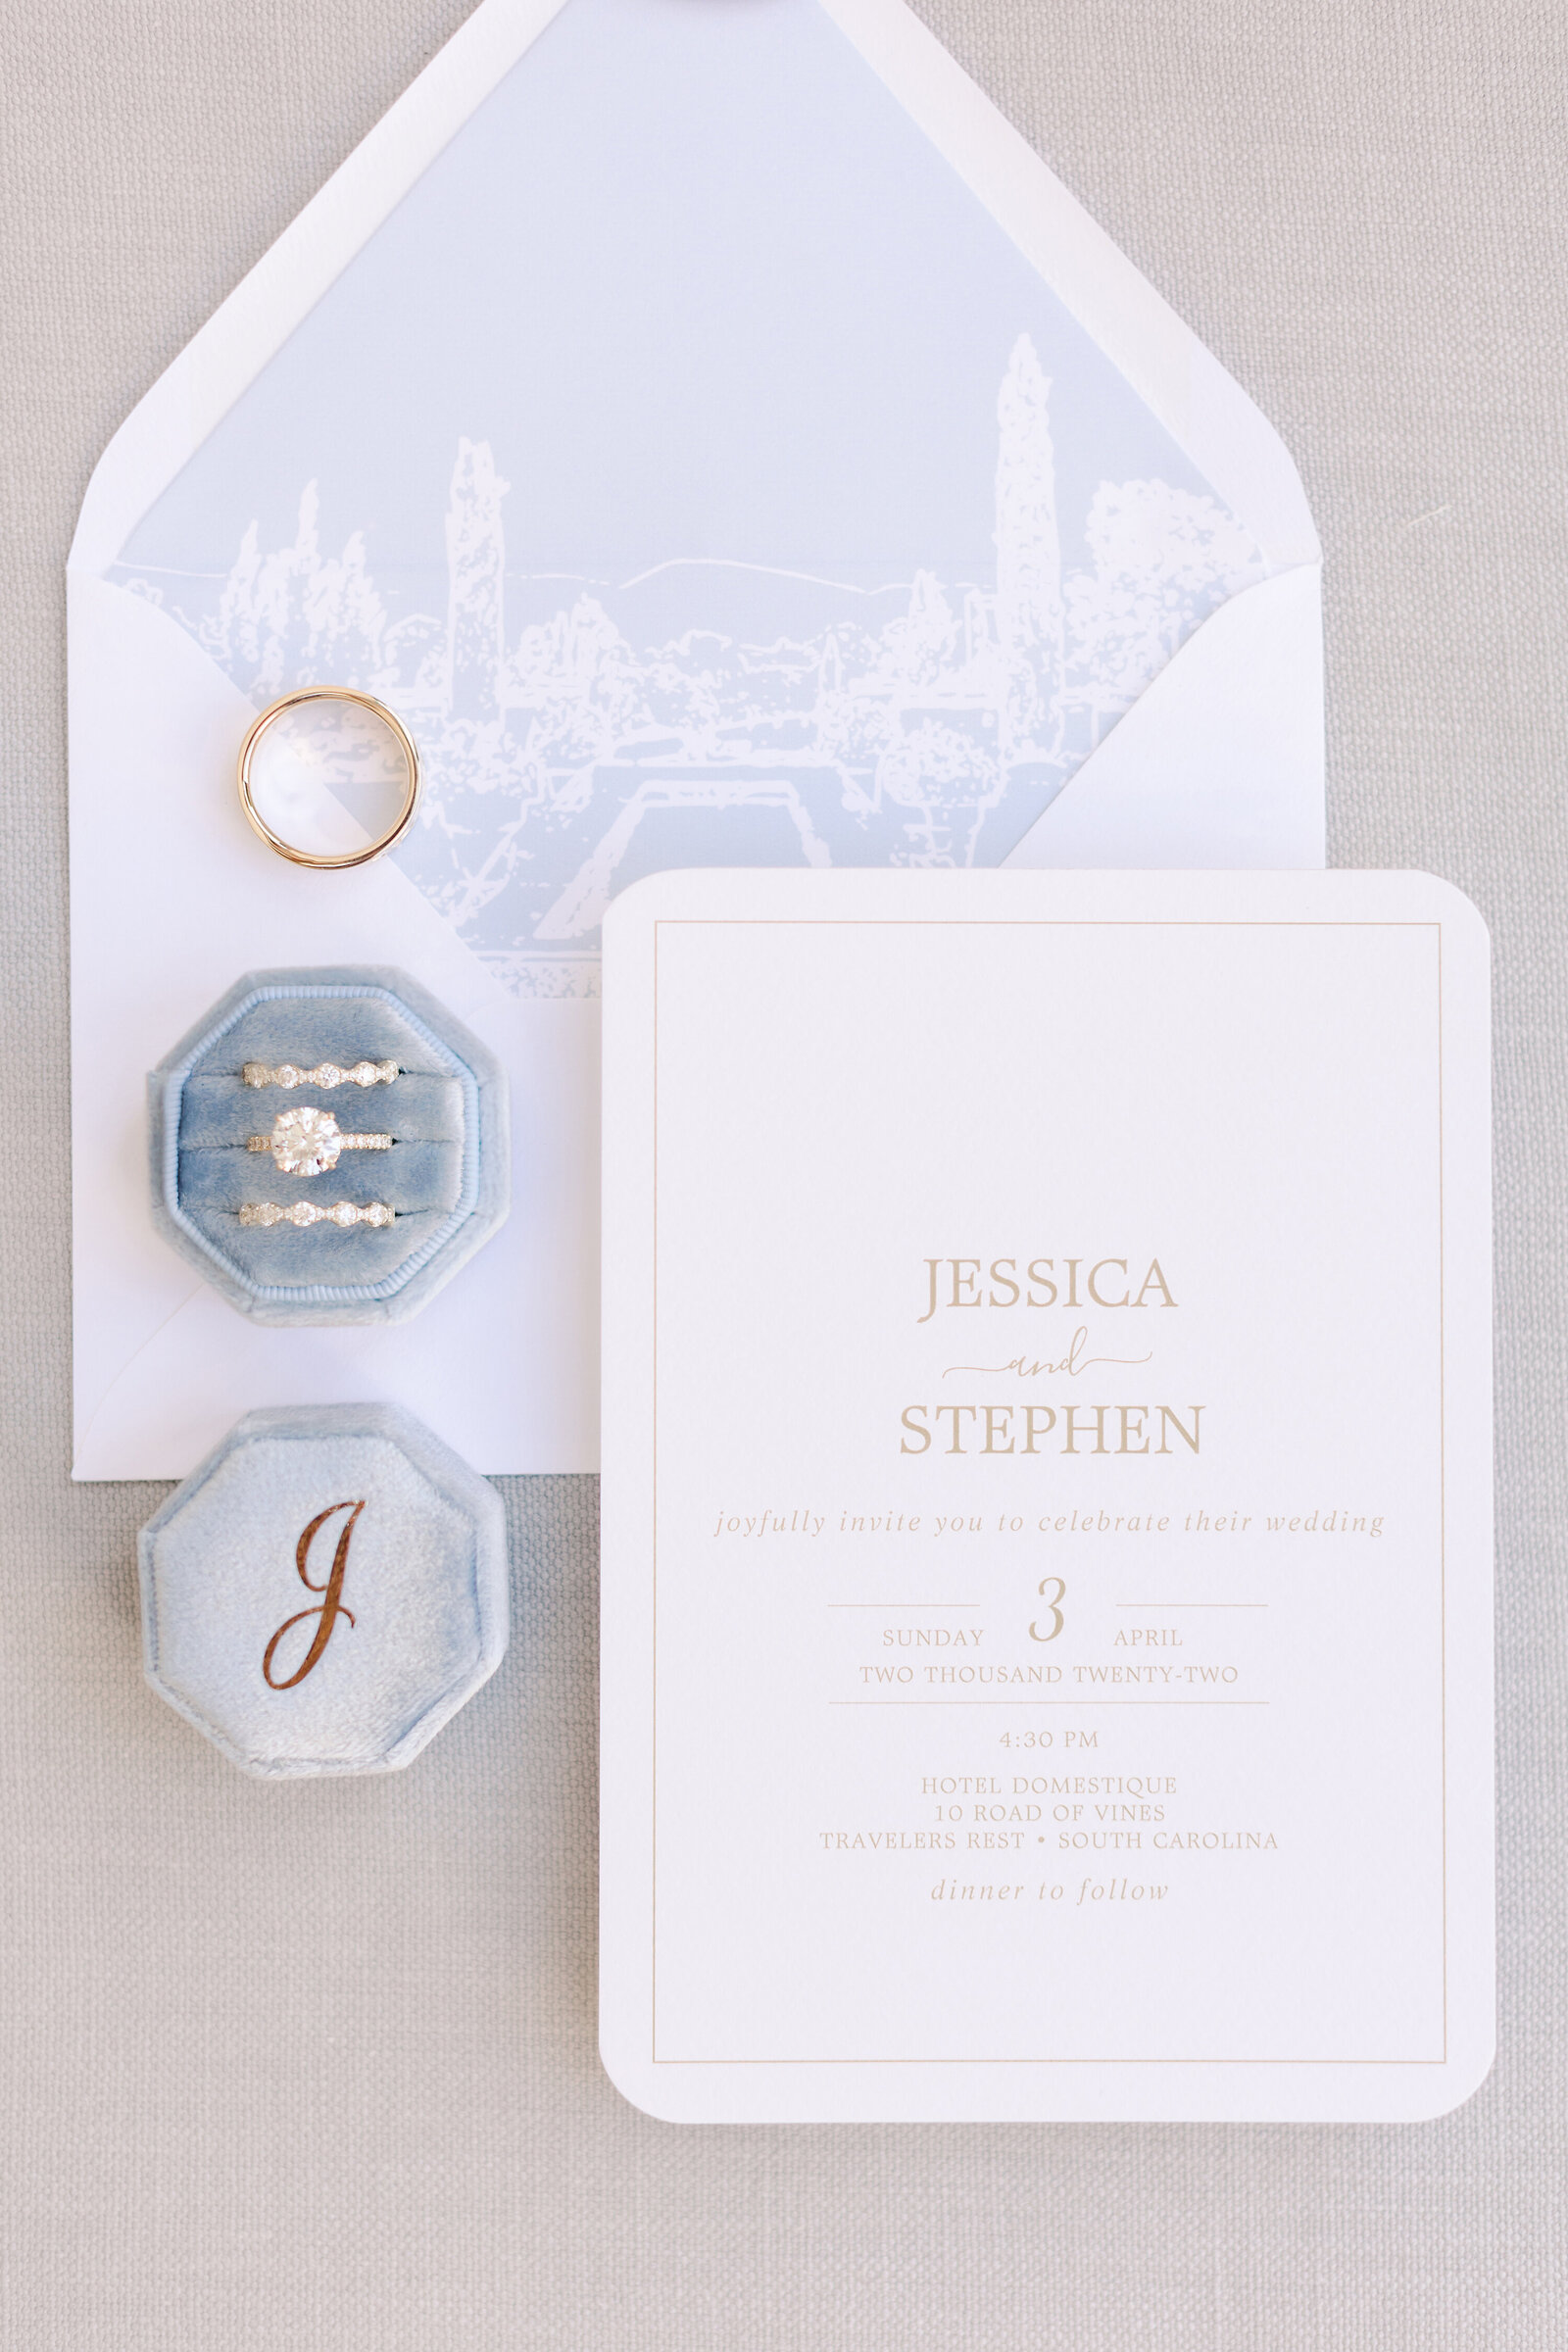 Jessica&Stephen_WEDDING-2